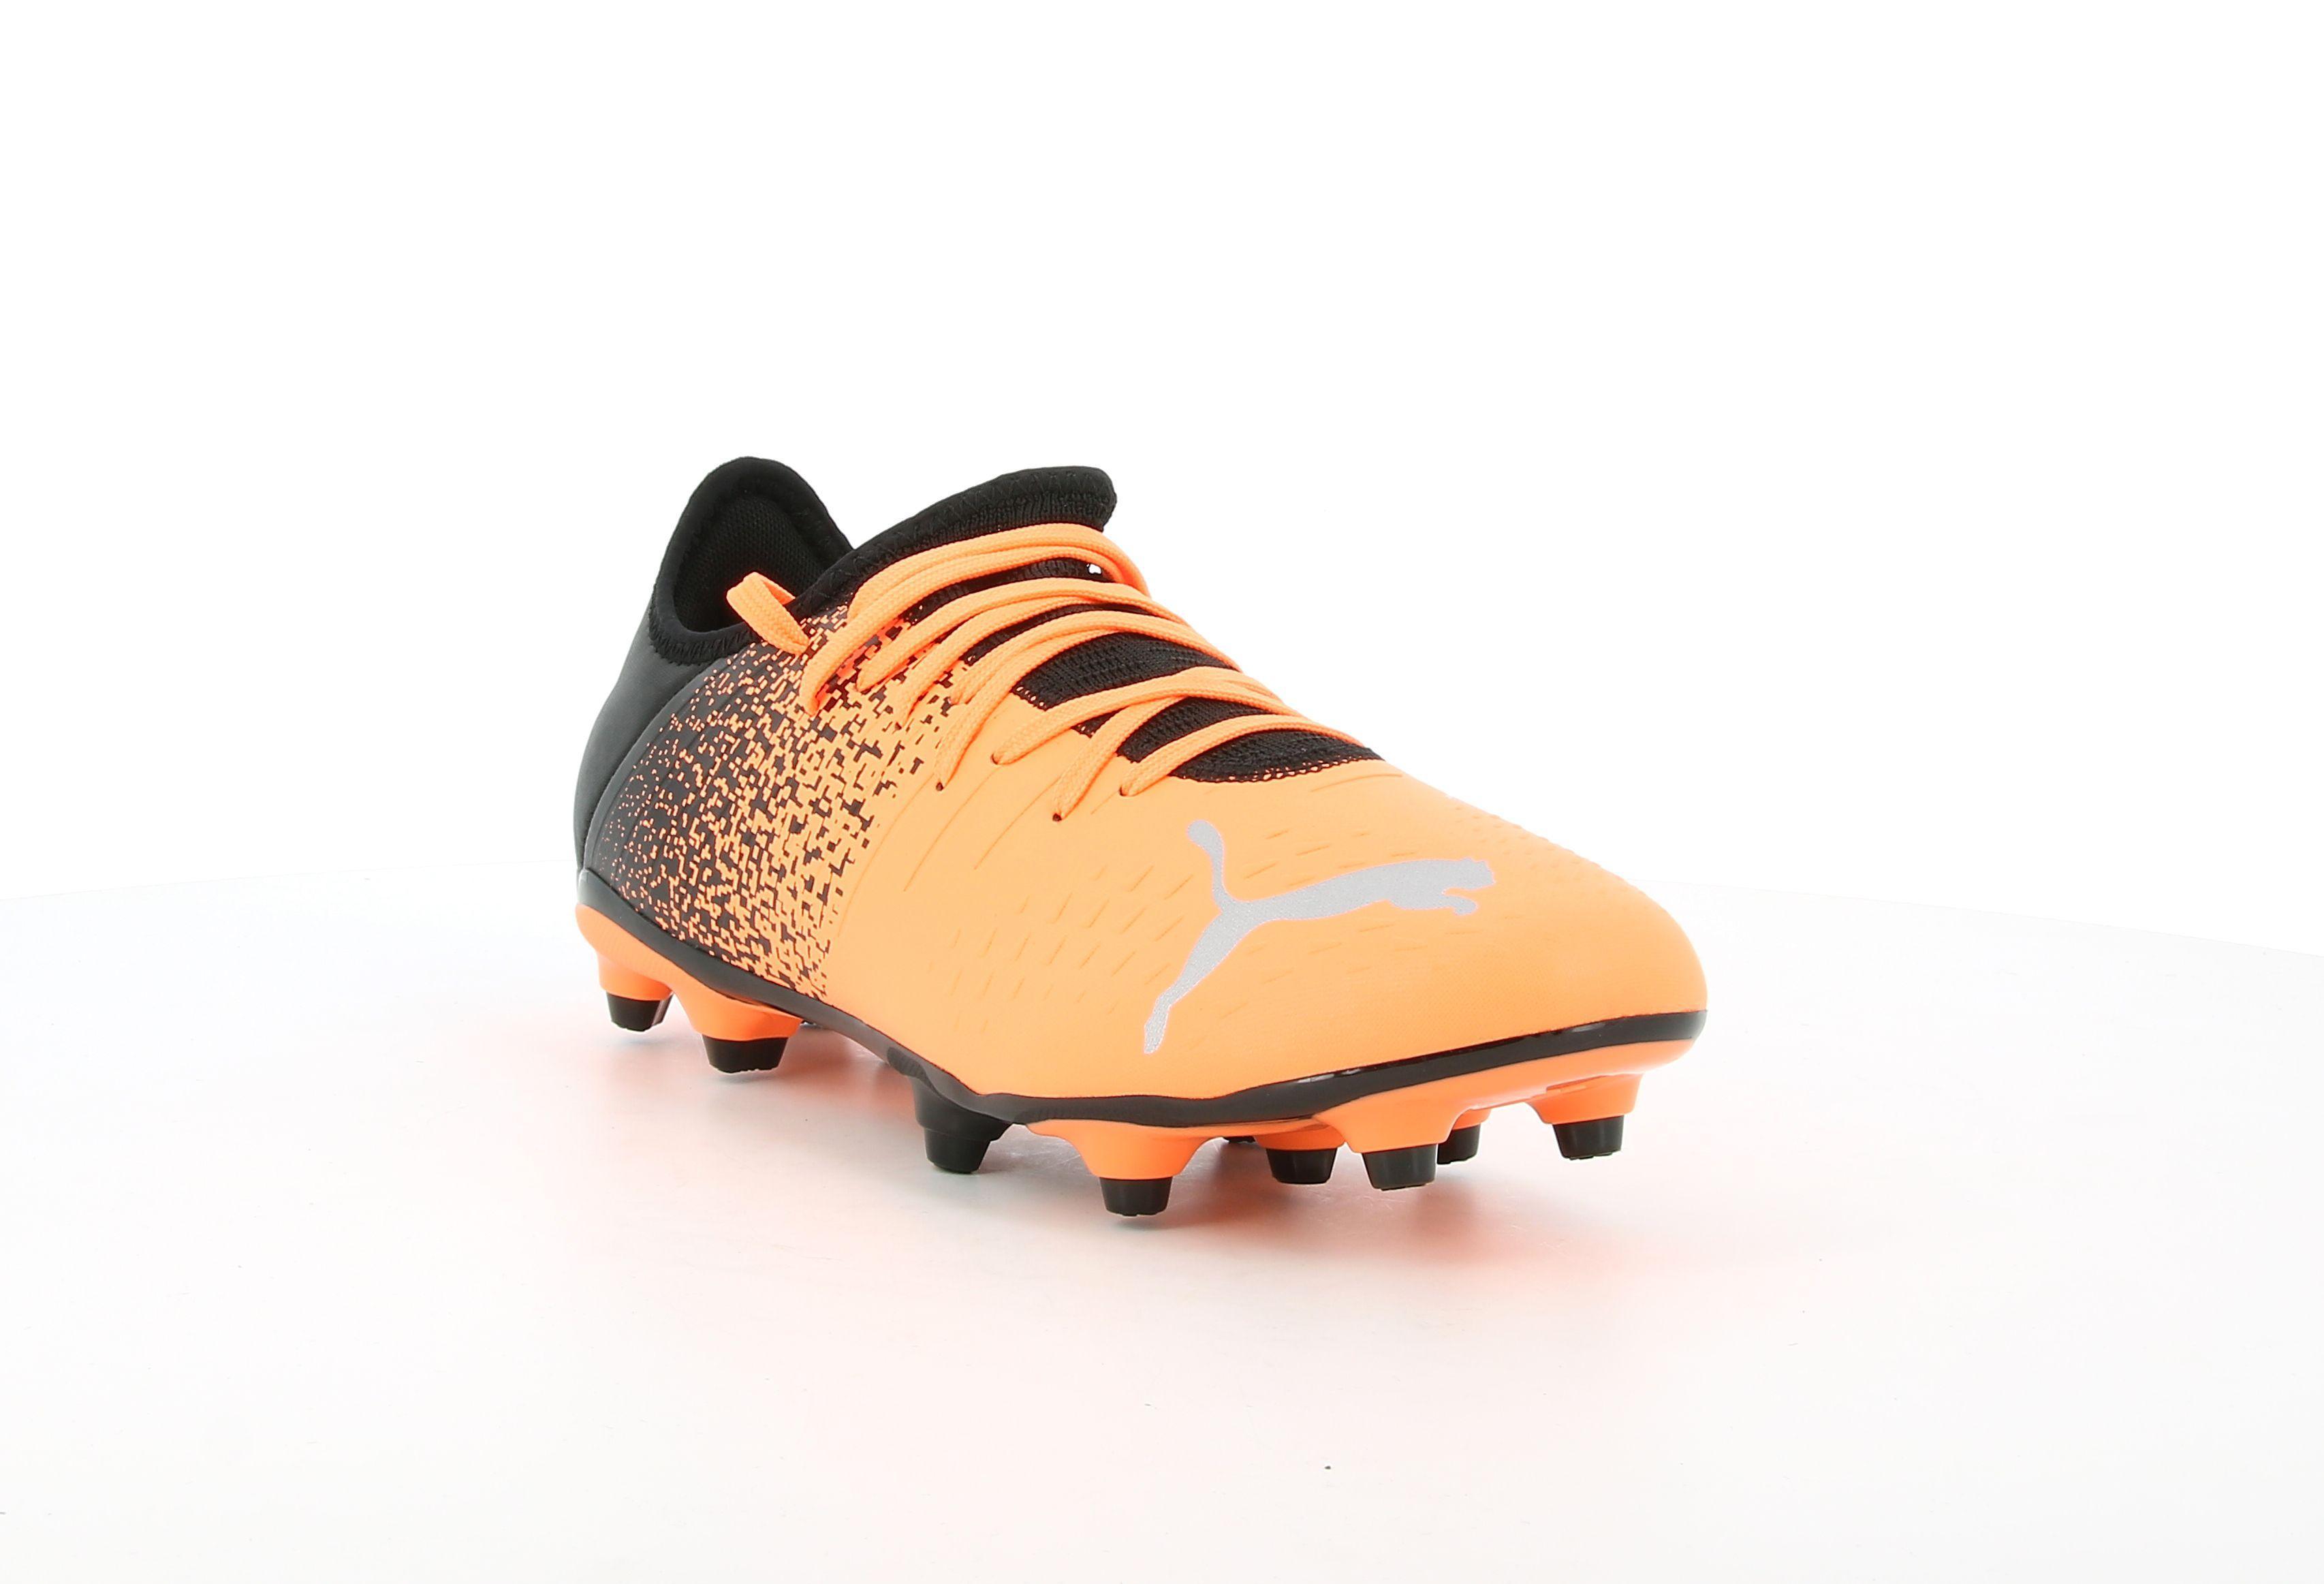 puma scarpa da calcio puma future z 4.3 fg/ag 106767 01. da uomo, colore arancio fluo